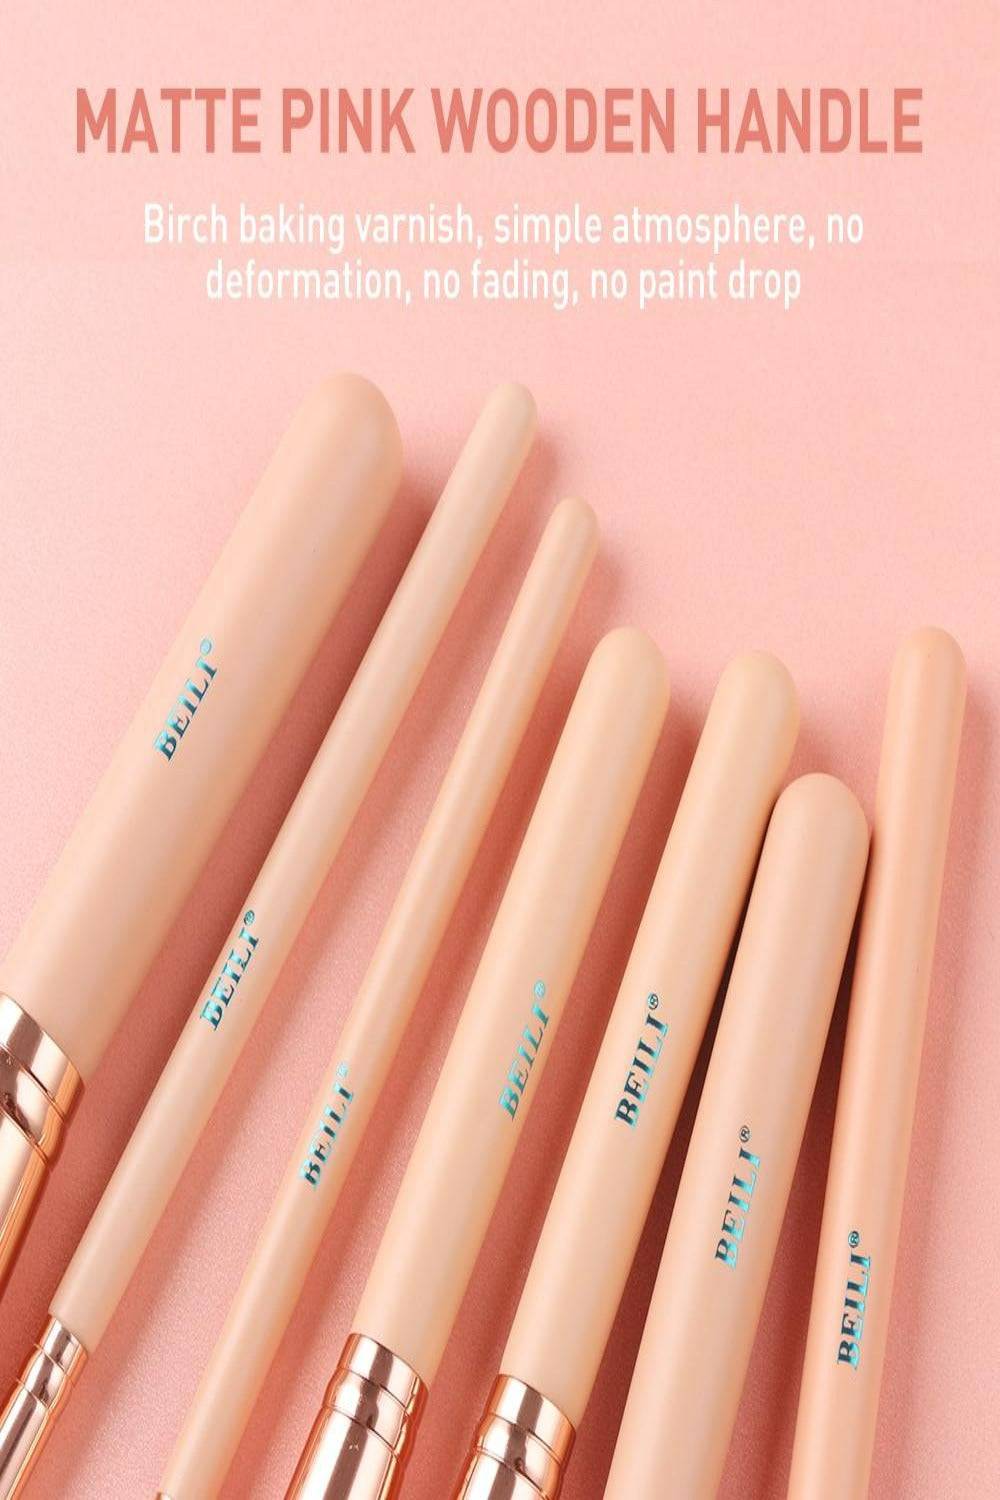 Pink Rose Gold Blending Makeup brush Set - 15 Pack - TGC Boutique - Makeup Brush Set